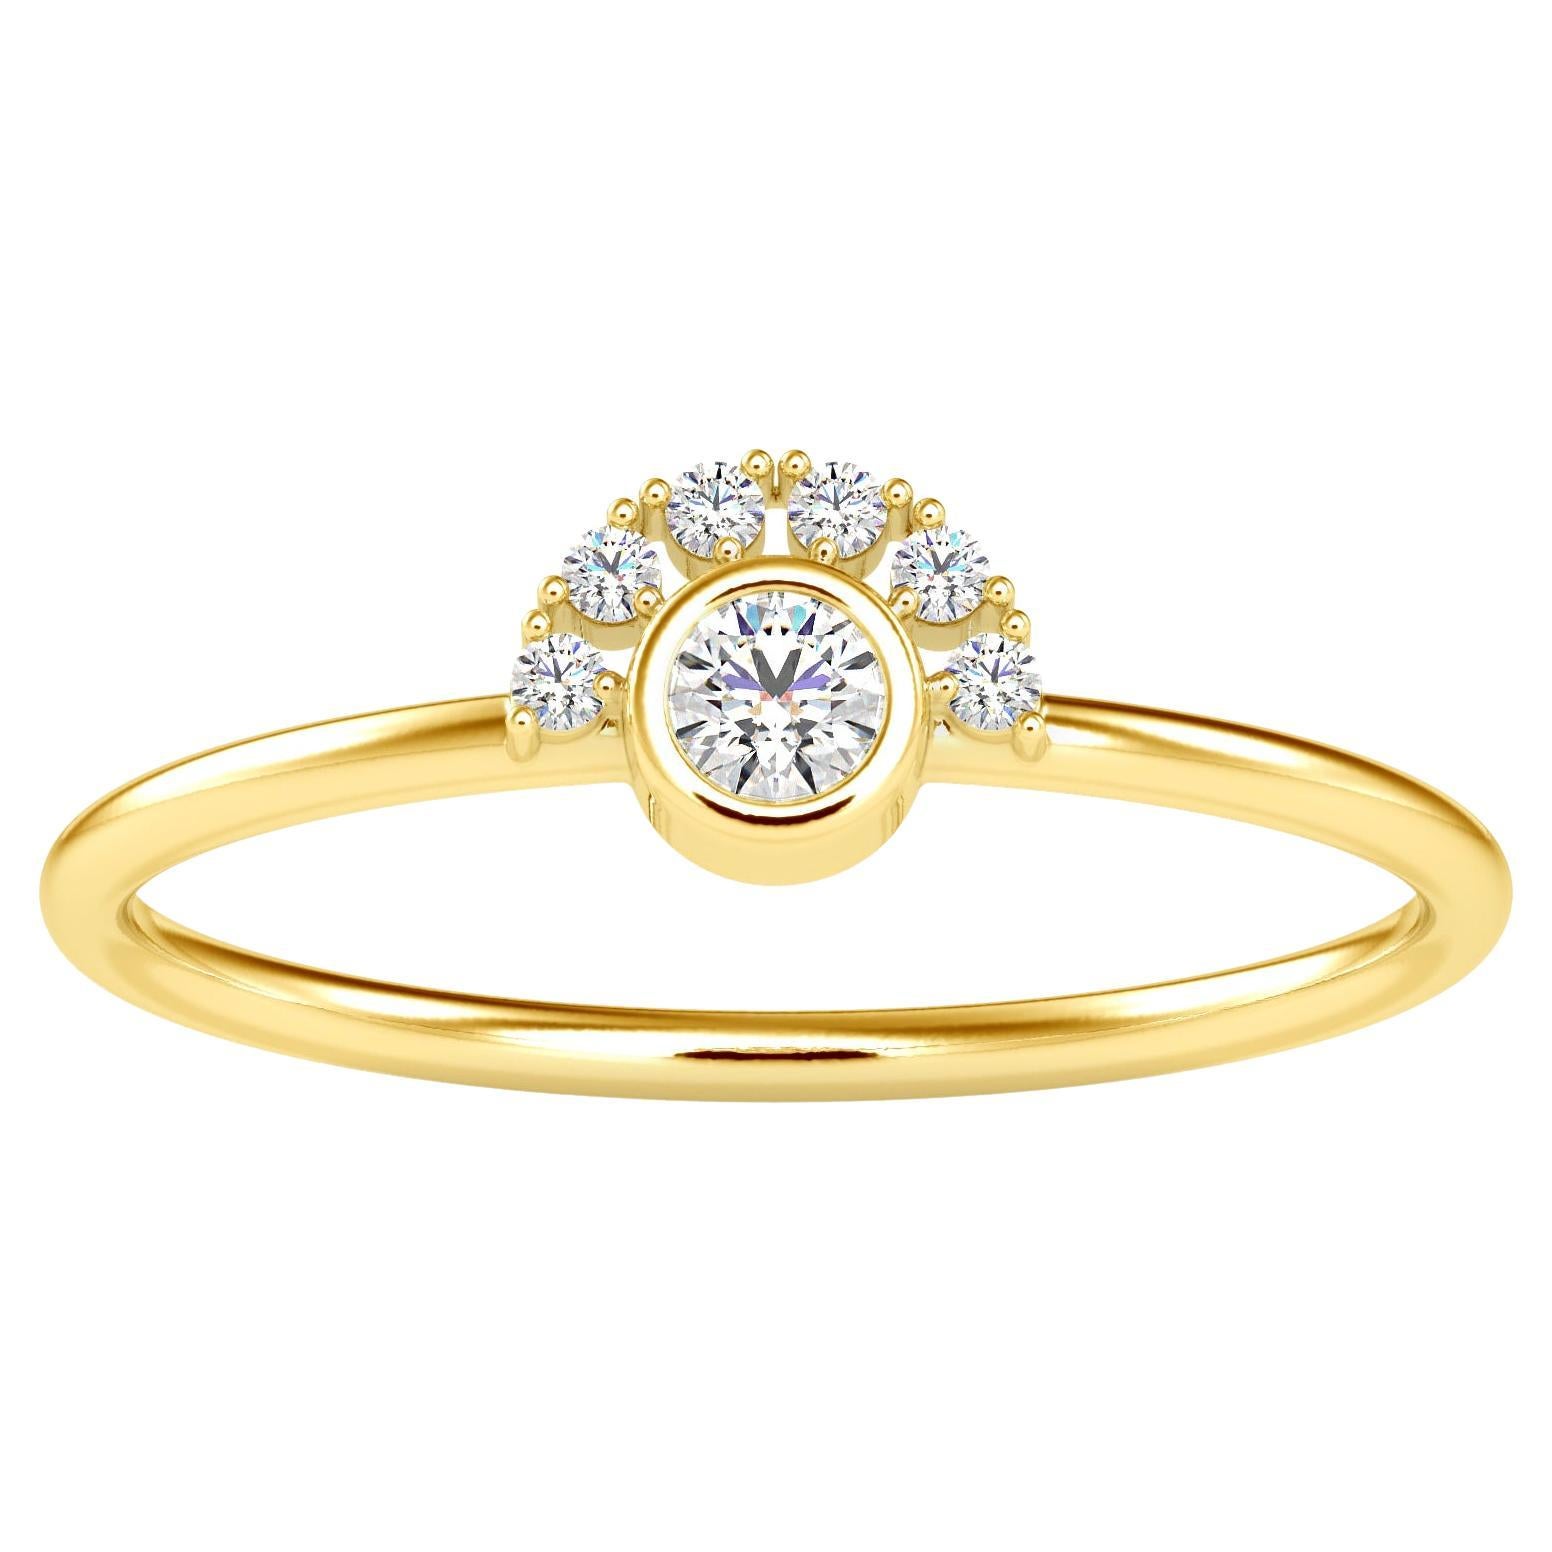 0.13 Carat Diamond 14K Yellow Gold Ring